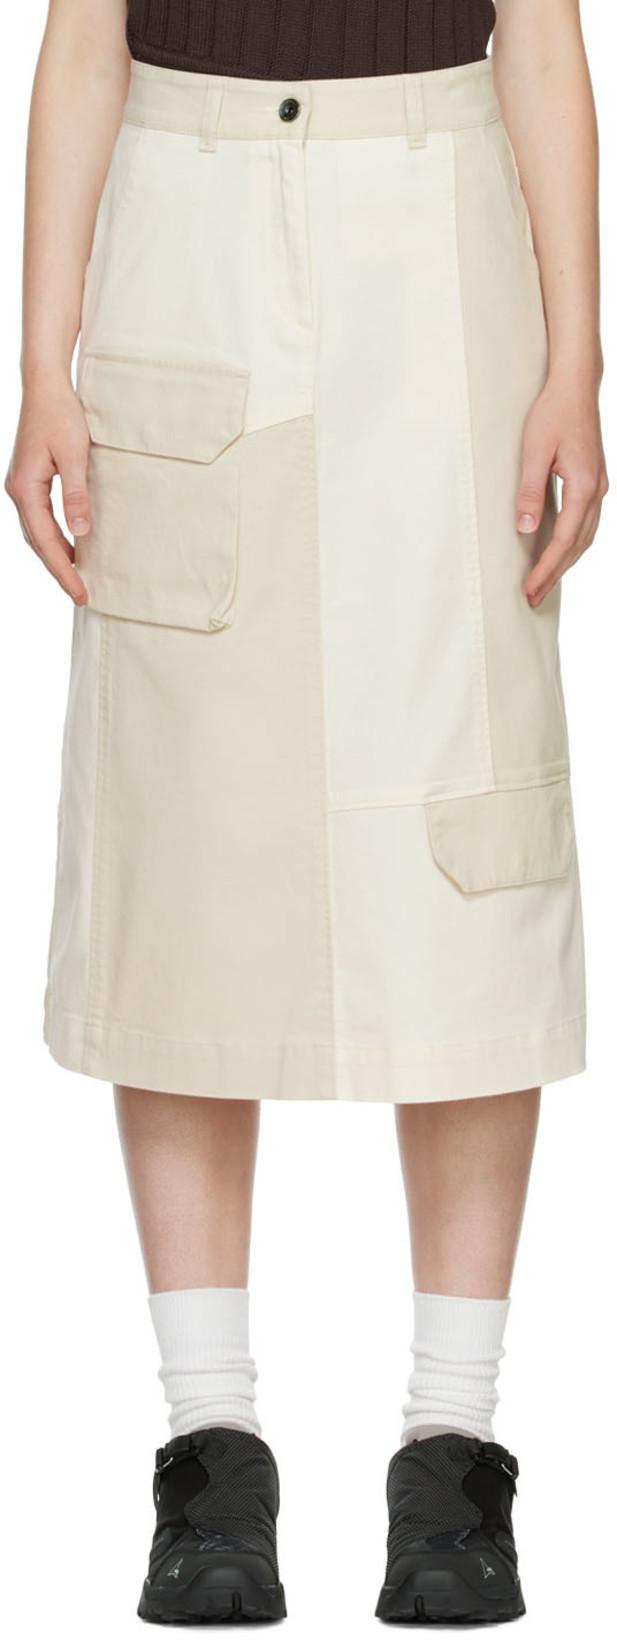 White Cotton Midi Skirt by DANIELLE CATHARI